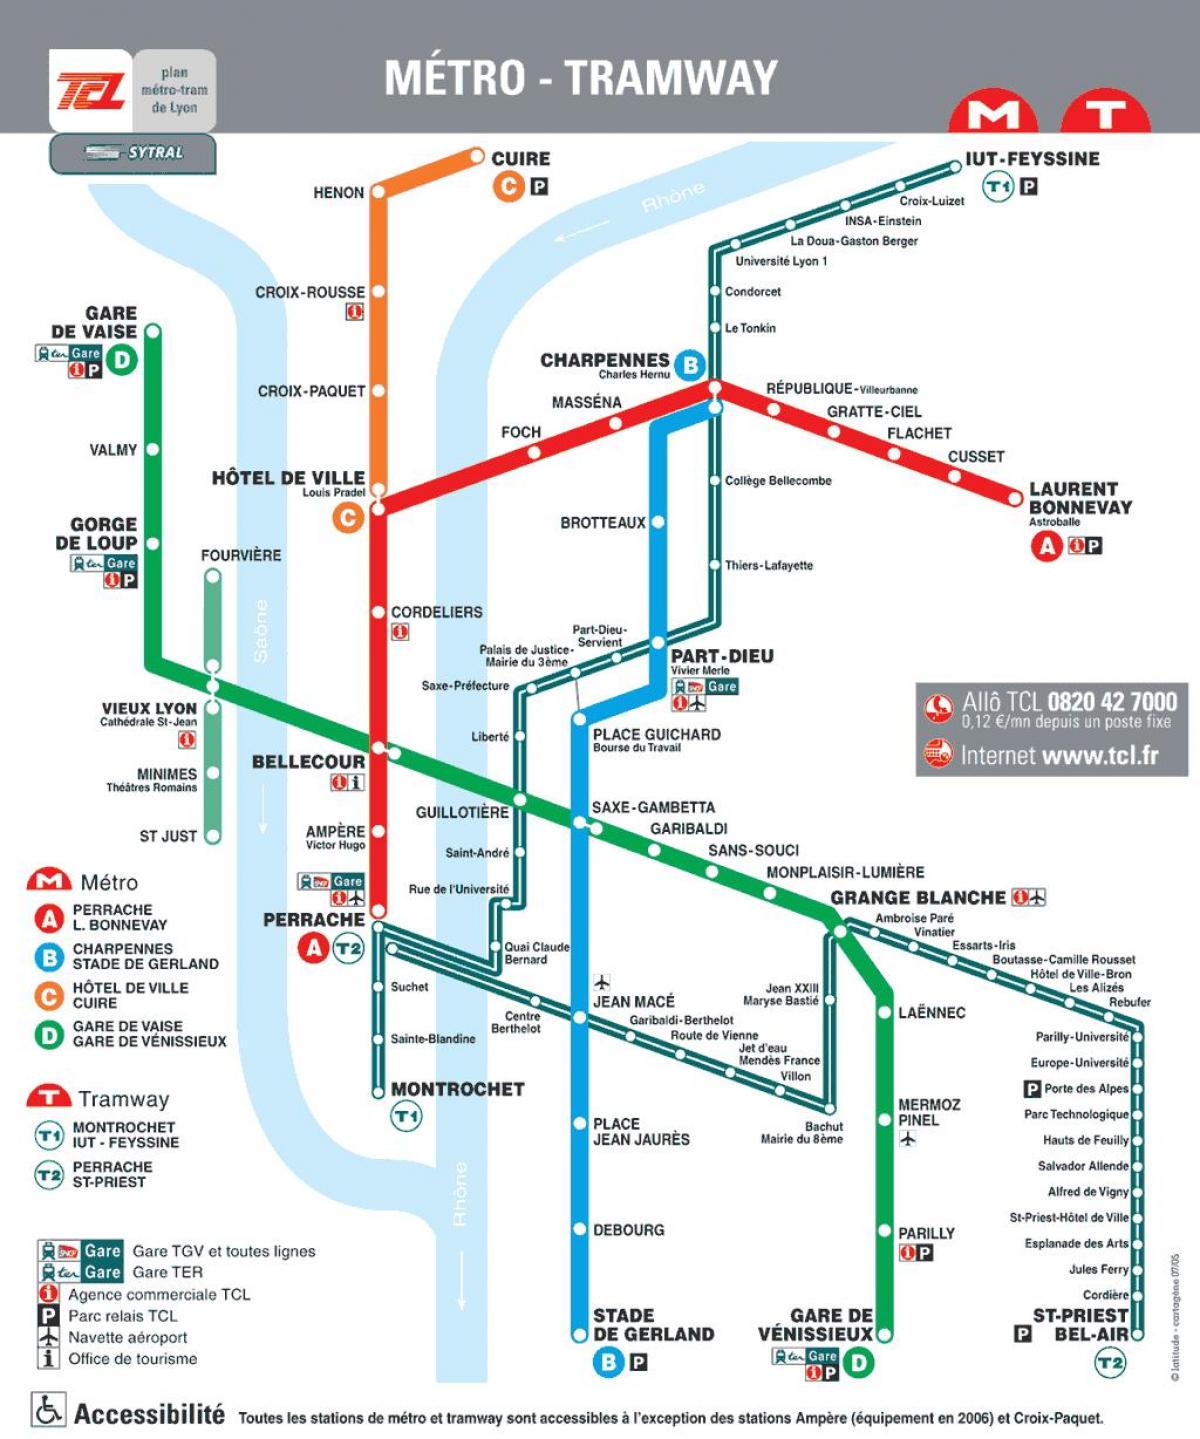 zemljevid podzemne železnice Lyon